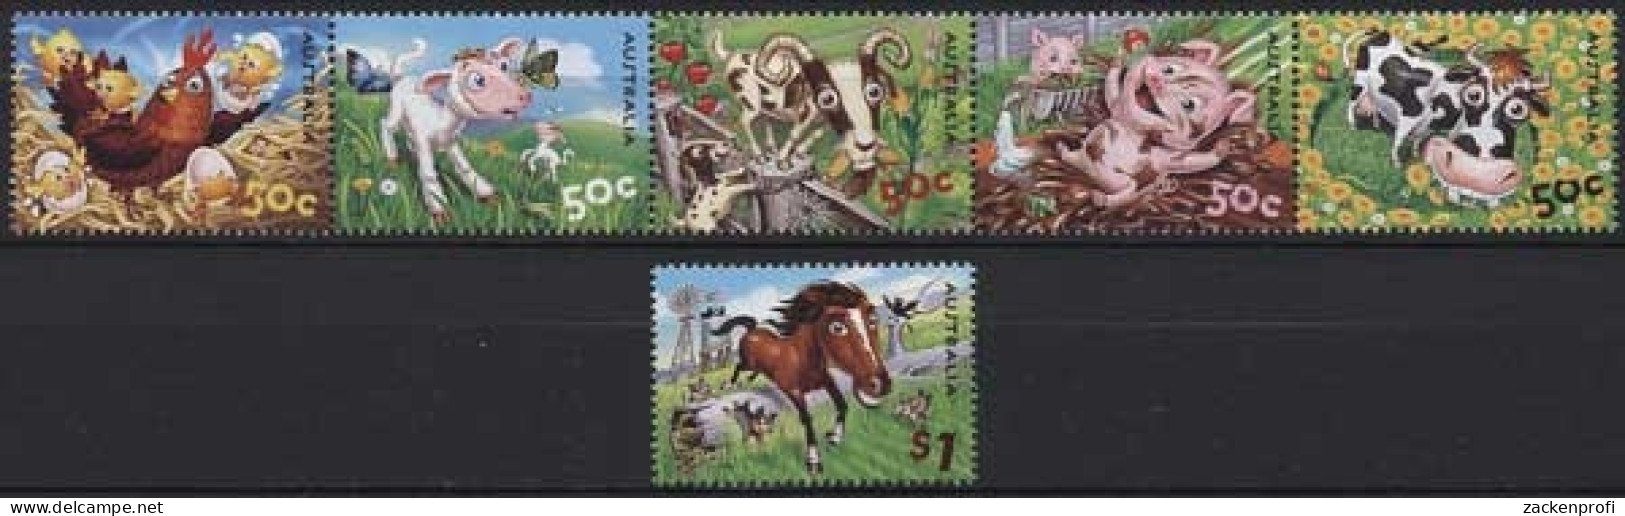 Australien 2005 Farmtiere 2492/97 ZD Postfrisch - Mint Stamps